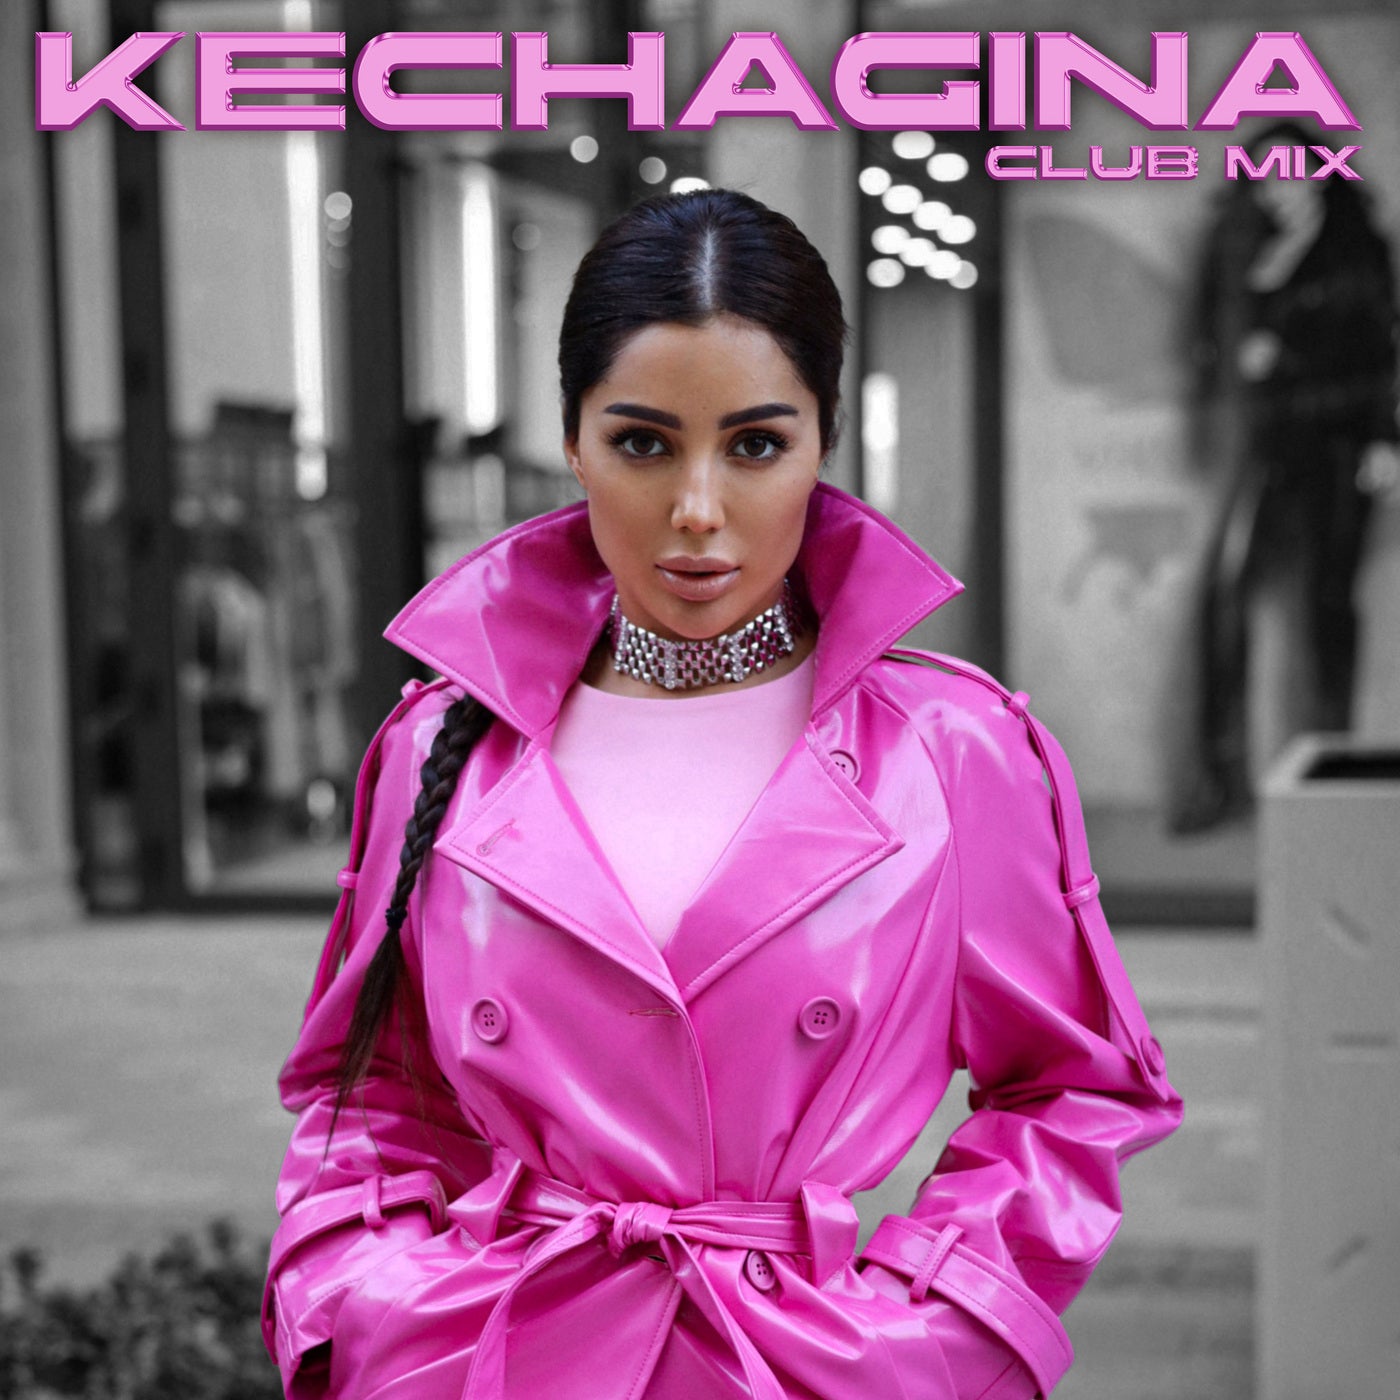 Kechagina (Club Mix)